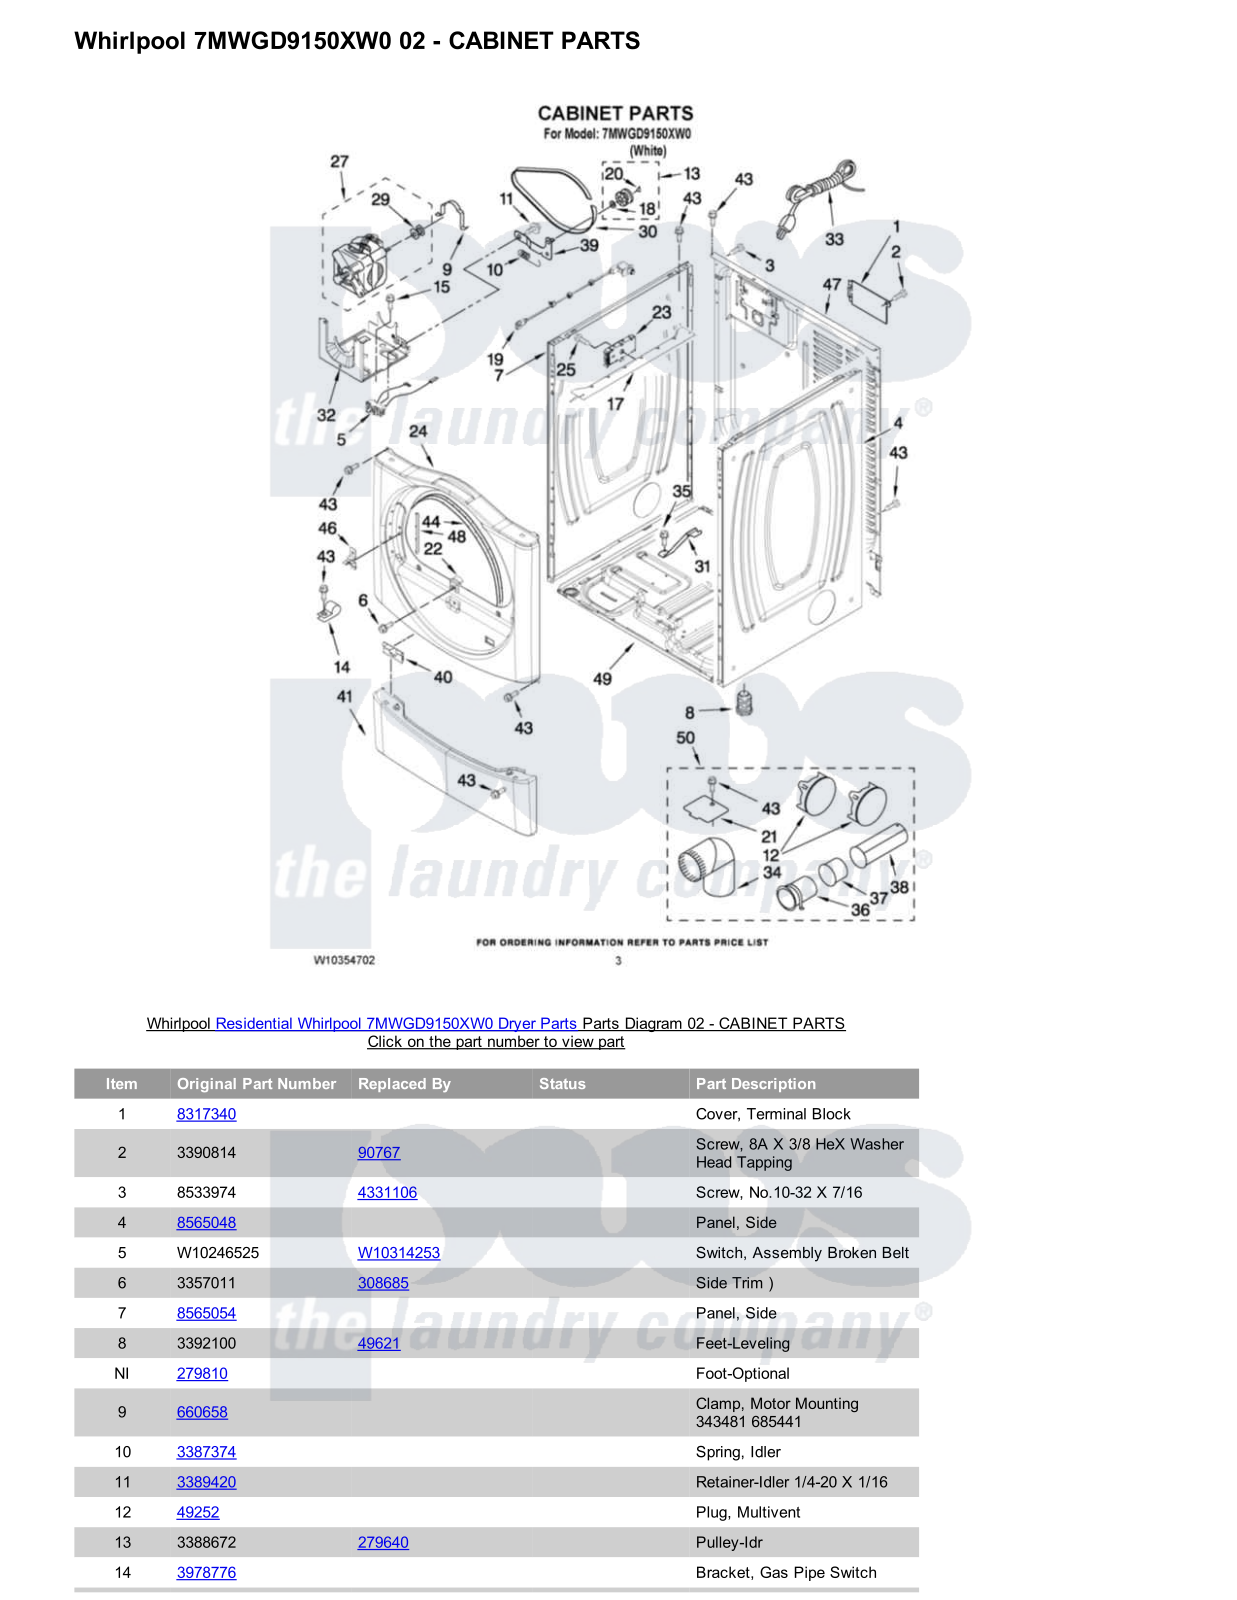 Whirlpool 7MWGD9150XW0 Parts Diagram